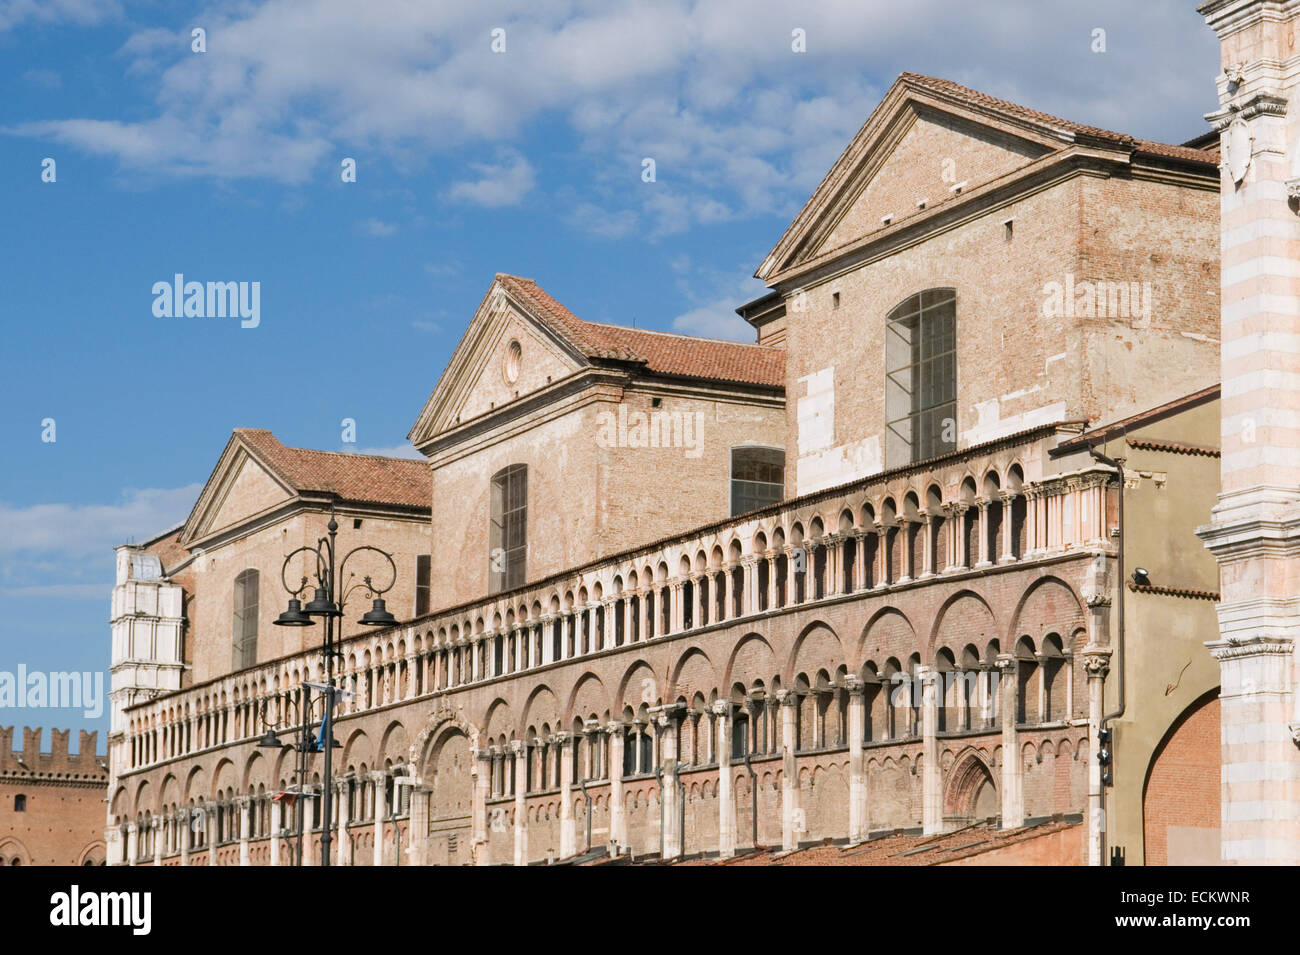 side view of San Giorgio's cathedral, Ferrara, Italy Stock Photo